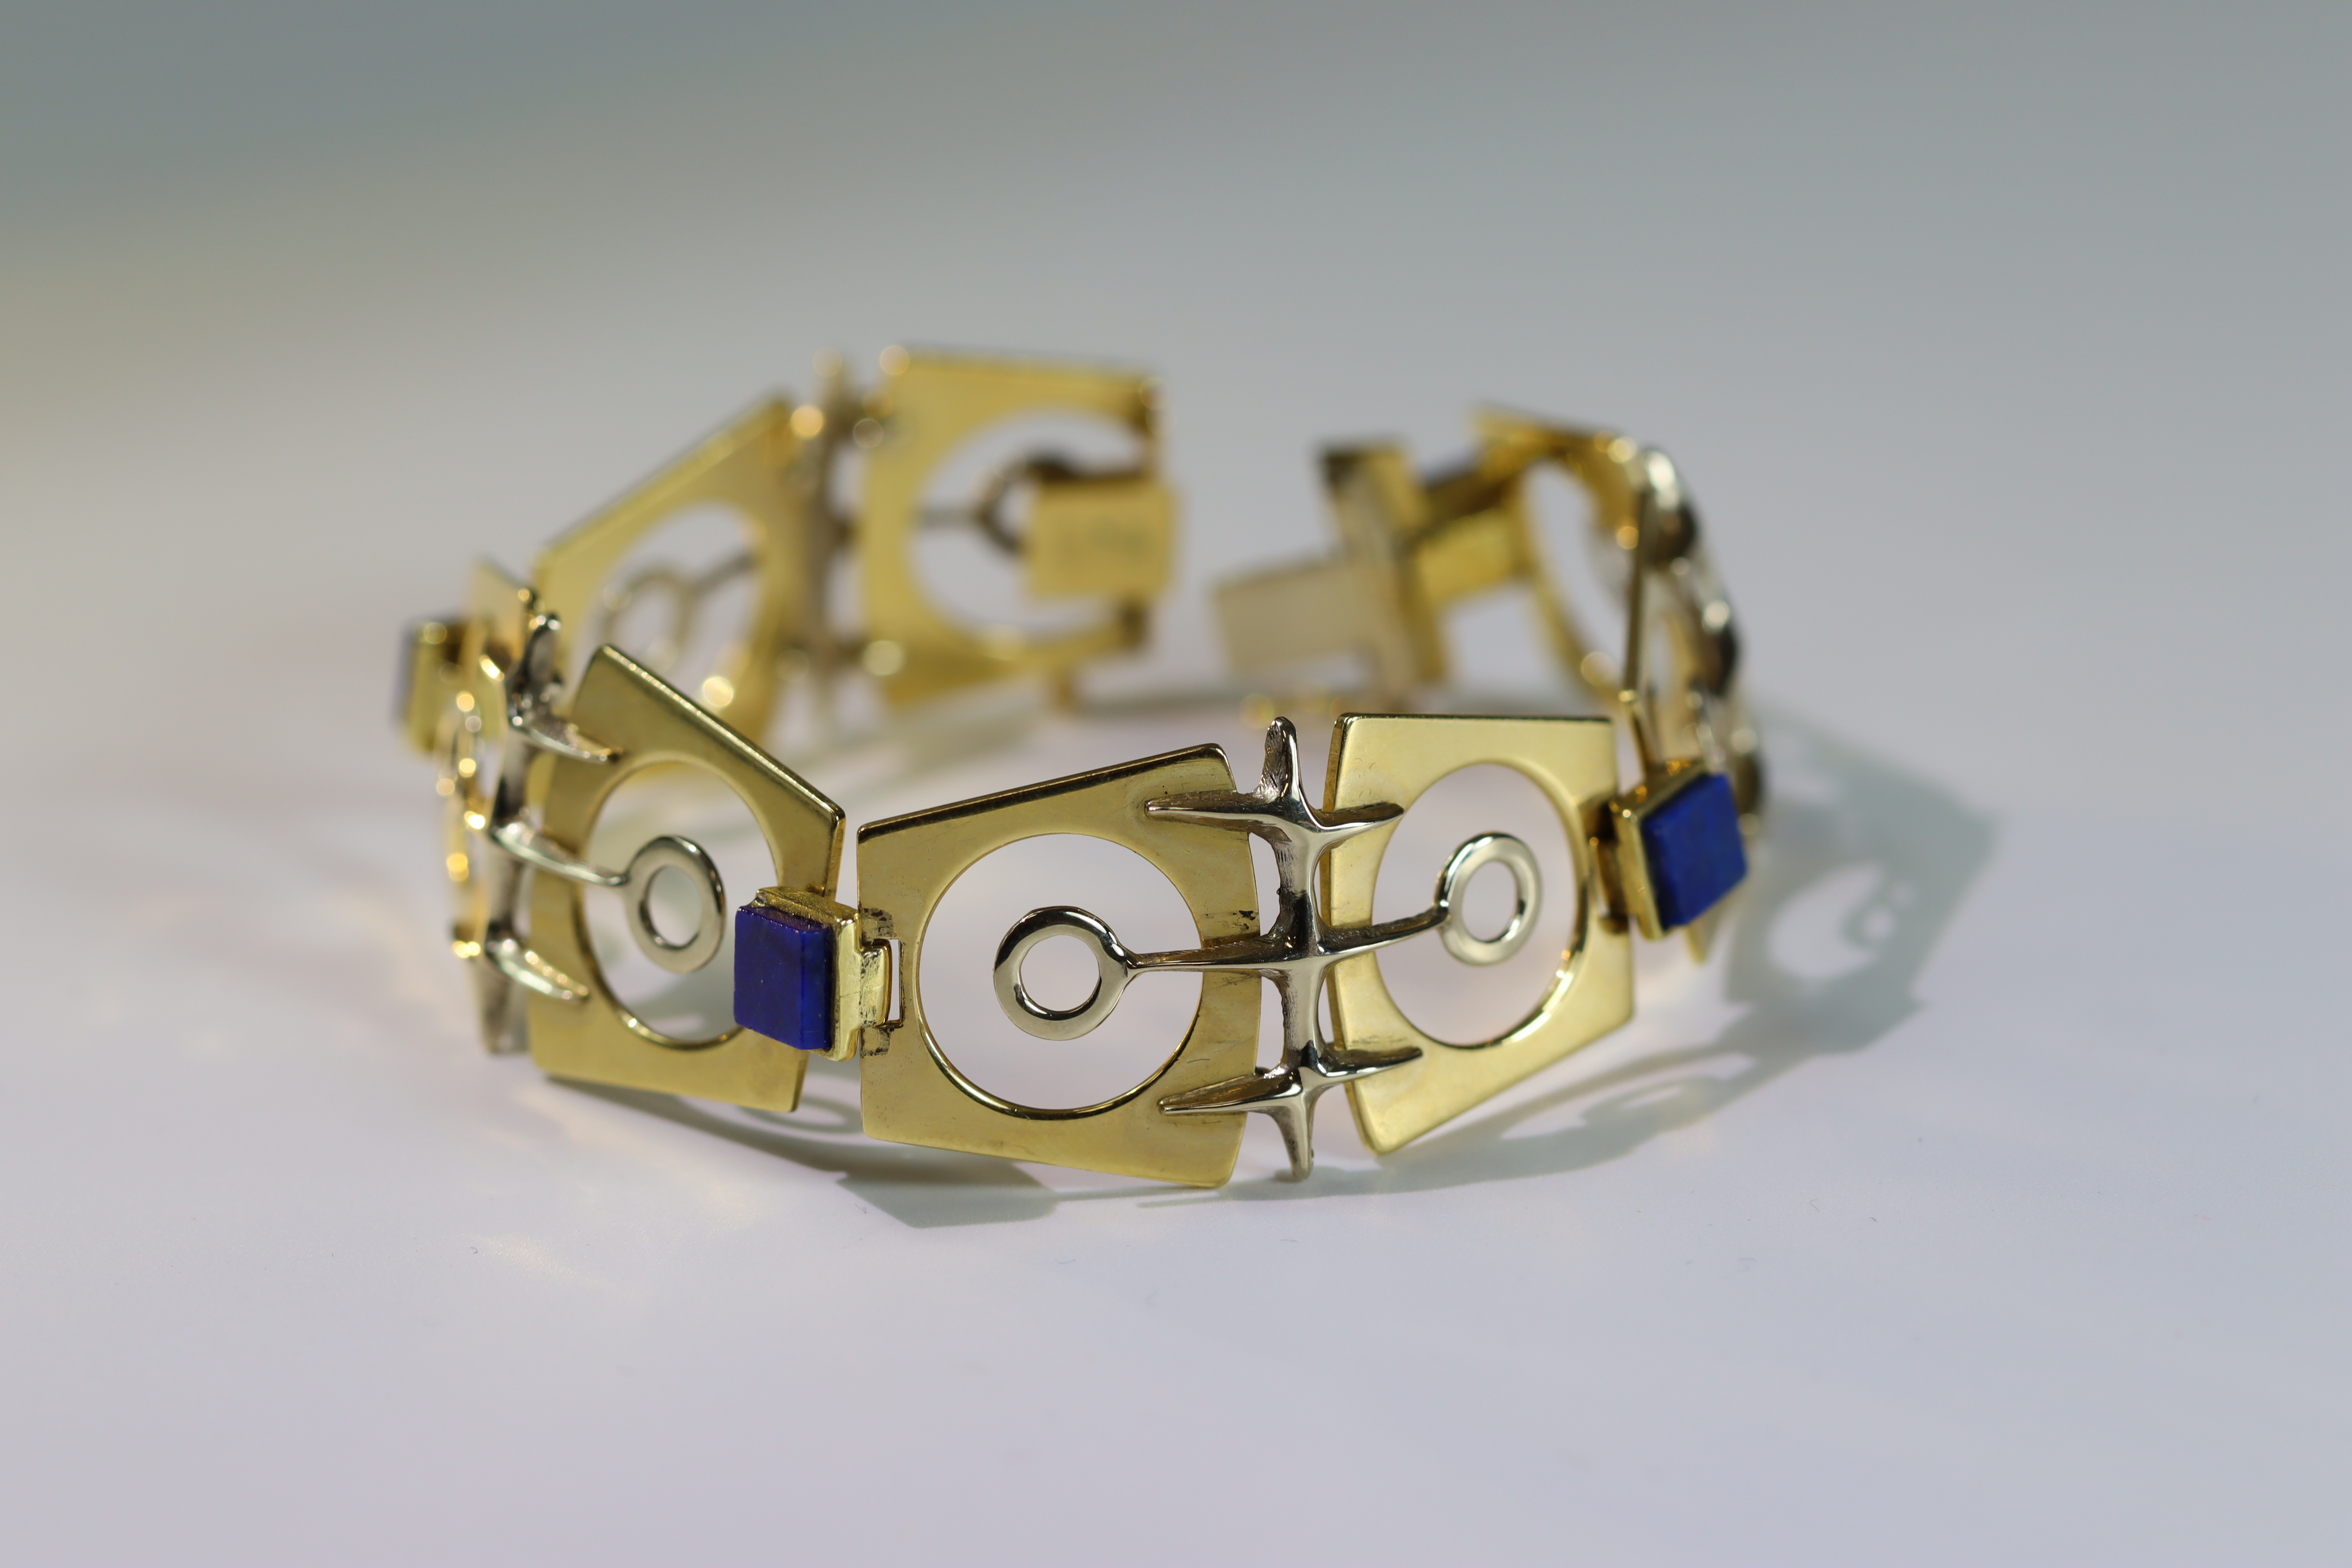 An Italian 18k Gold Bracelet set with Lapis lazuli, designed by Galoppi. Fully signed. Weight 44.